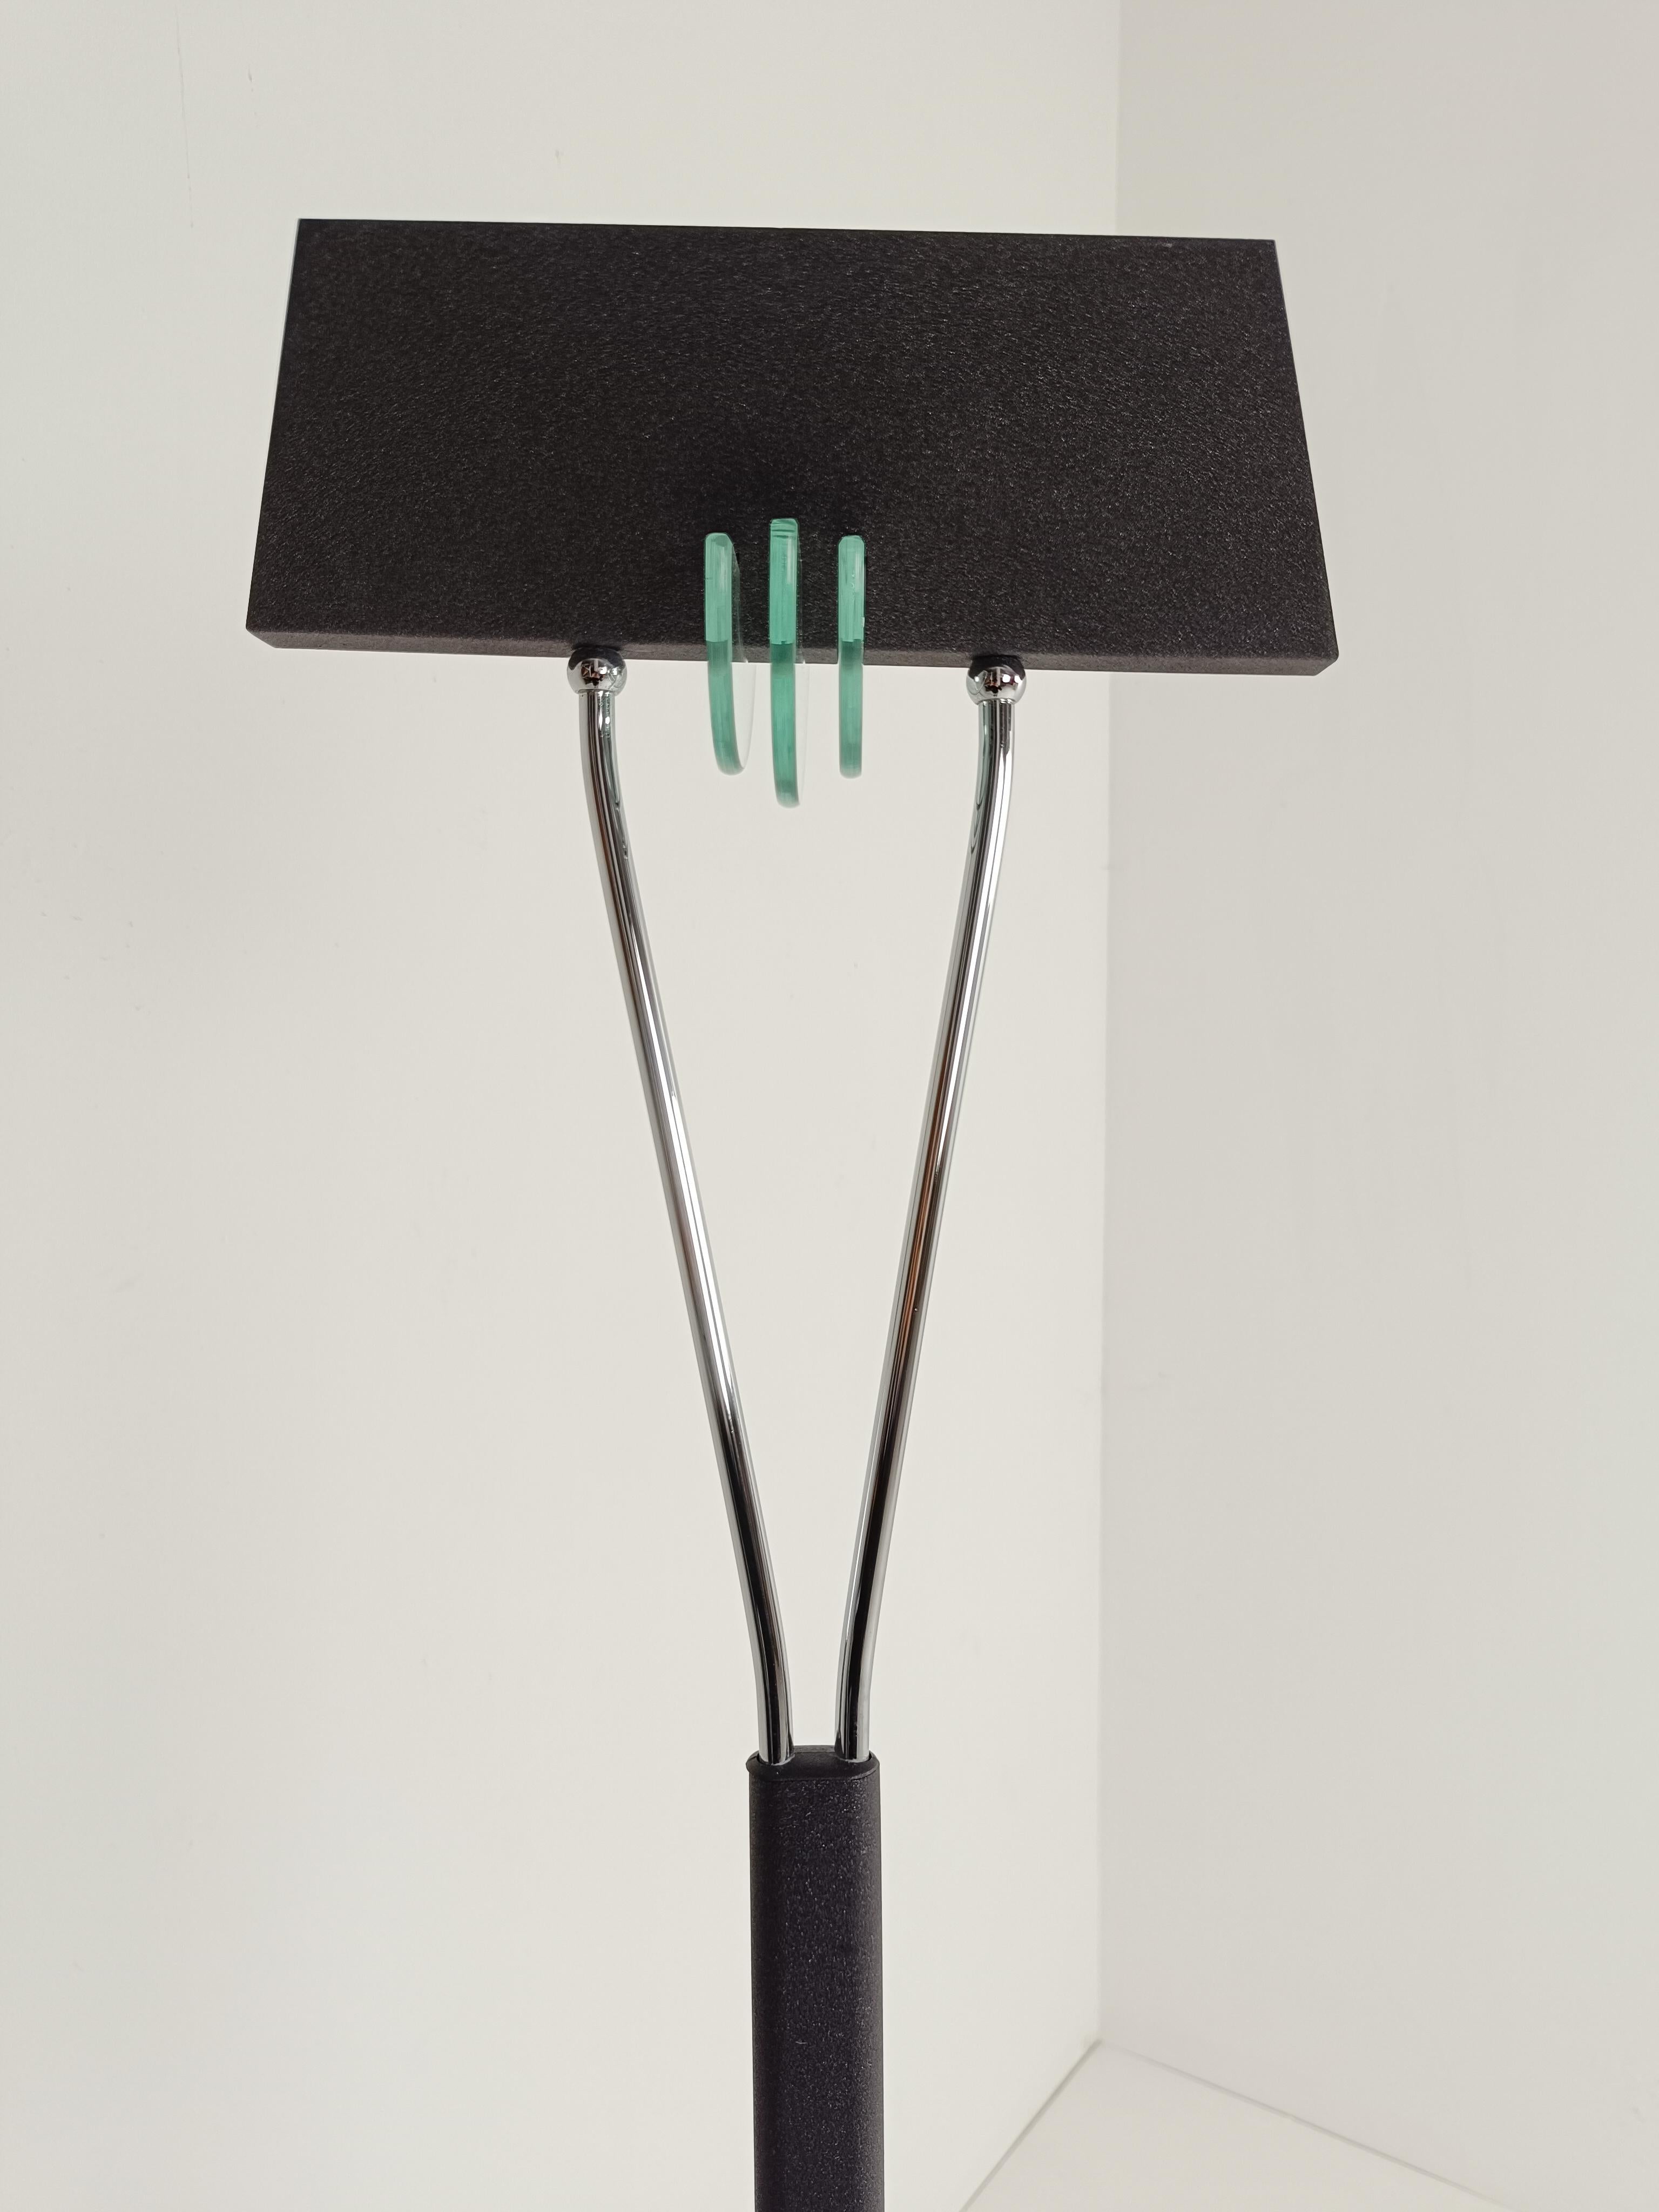 Italian Post modern Floor Lamp in the Style of Fontana Arte, 80s / 90s  For Sale 7